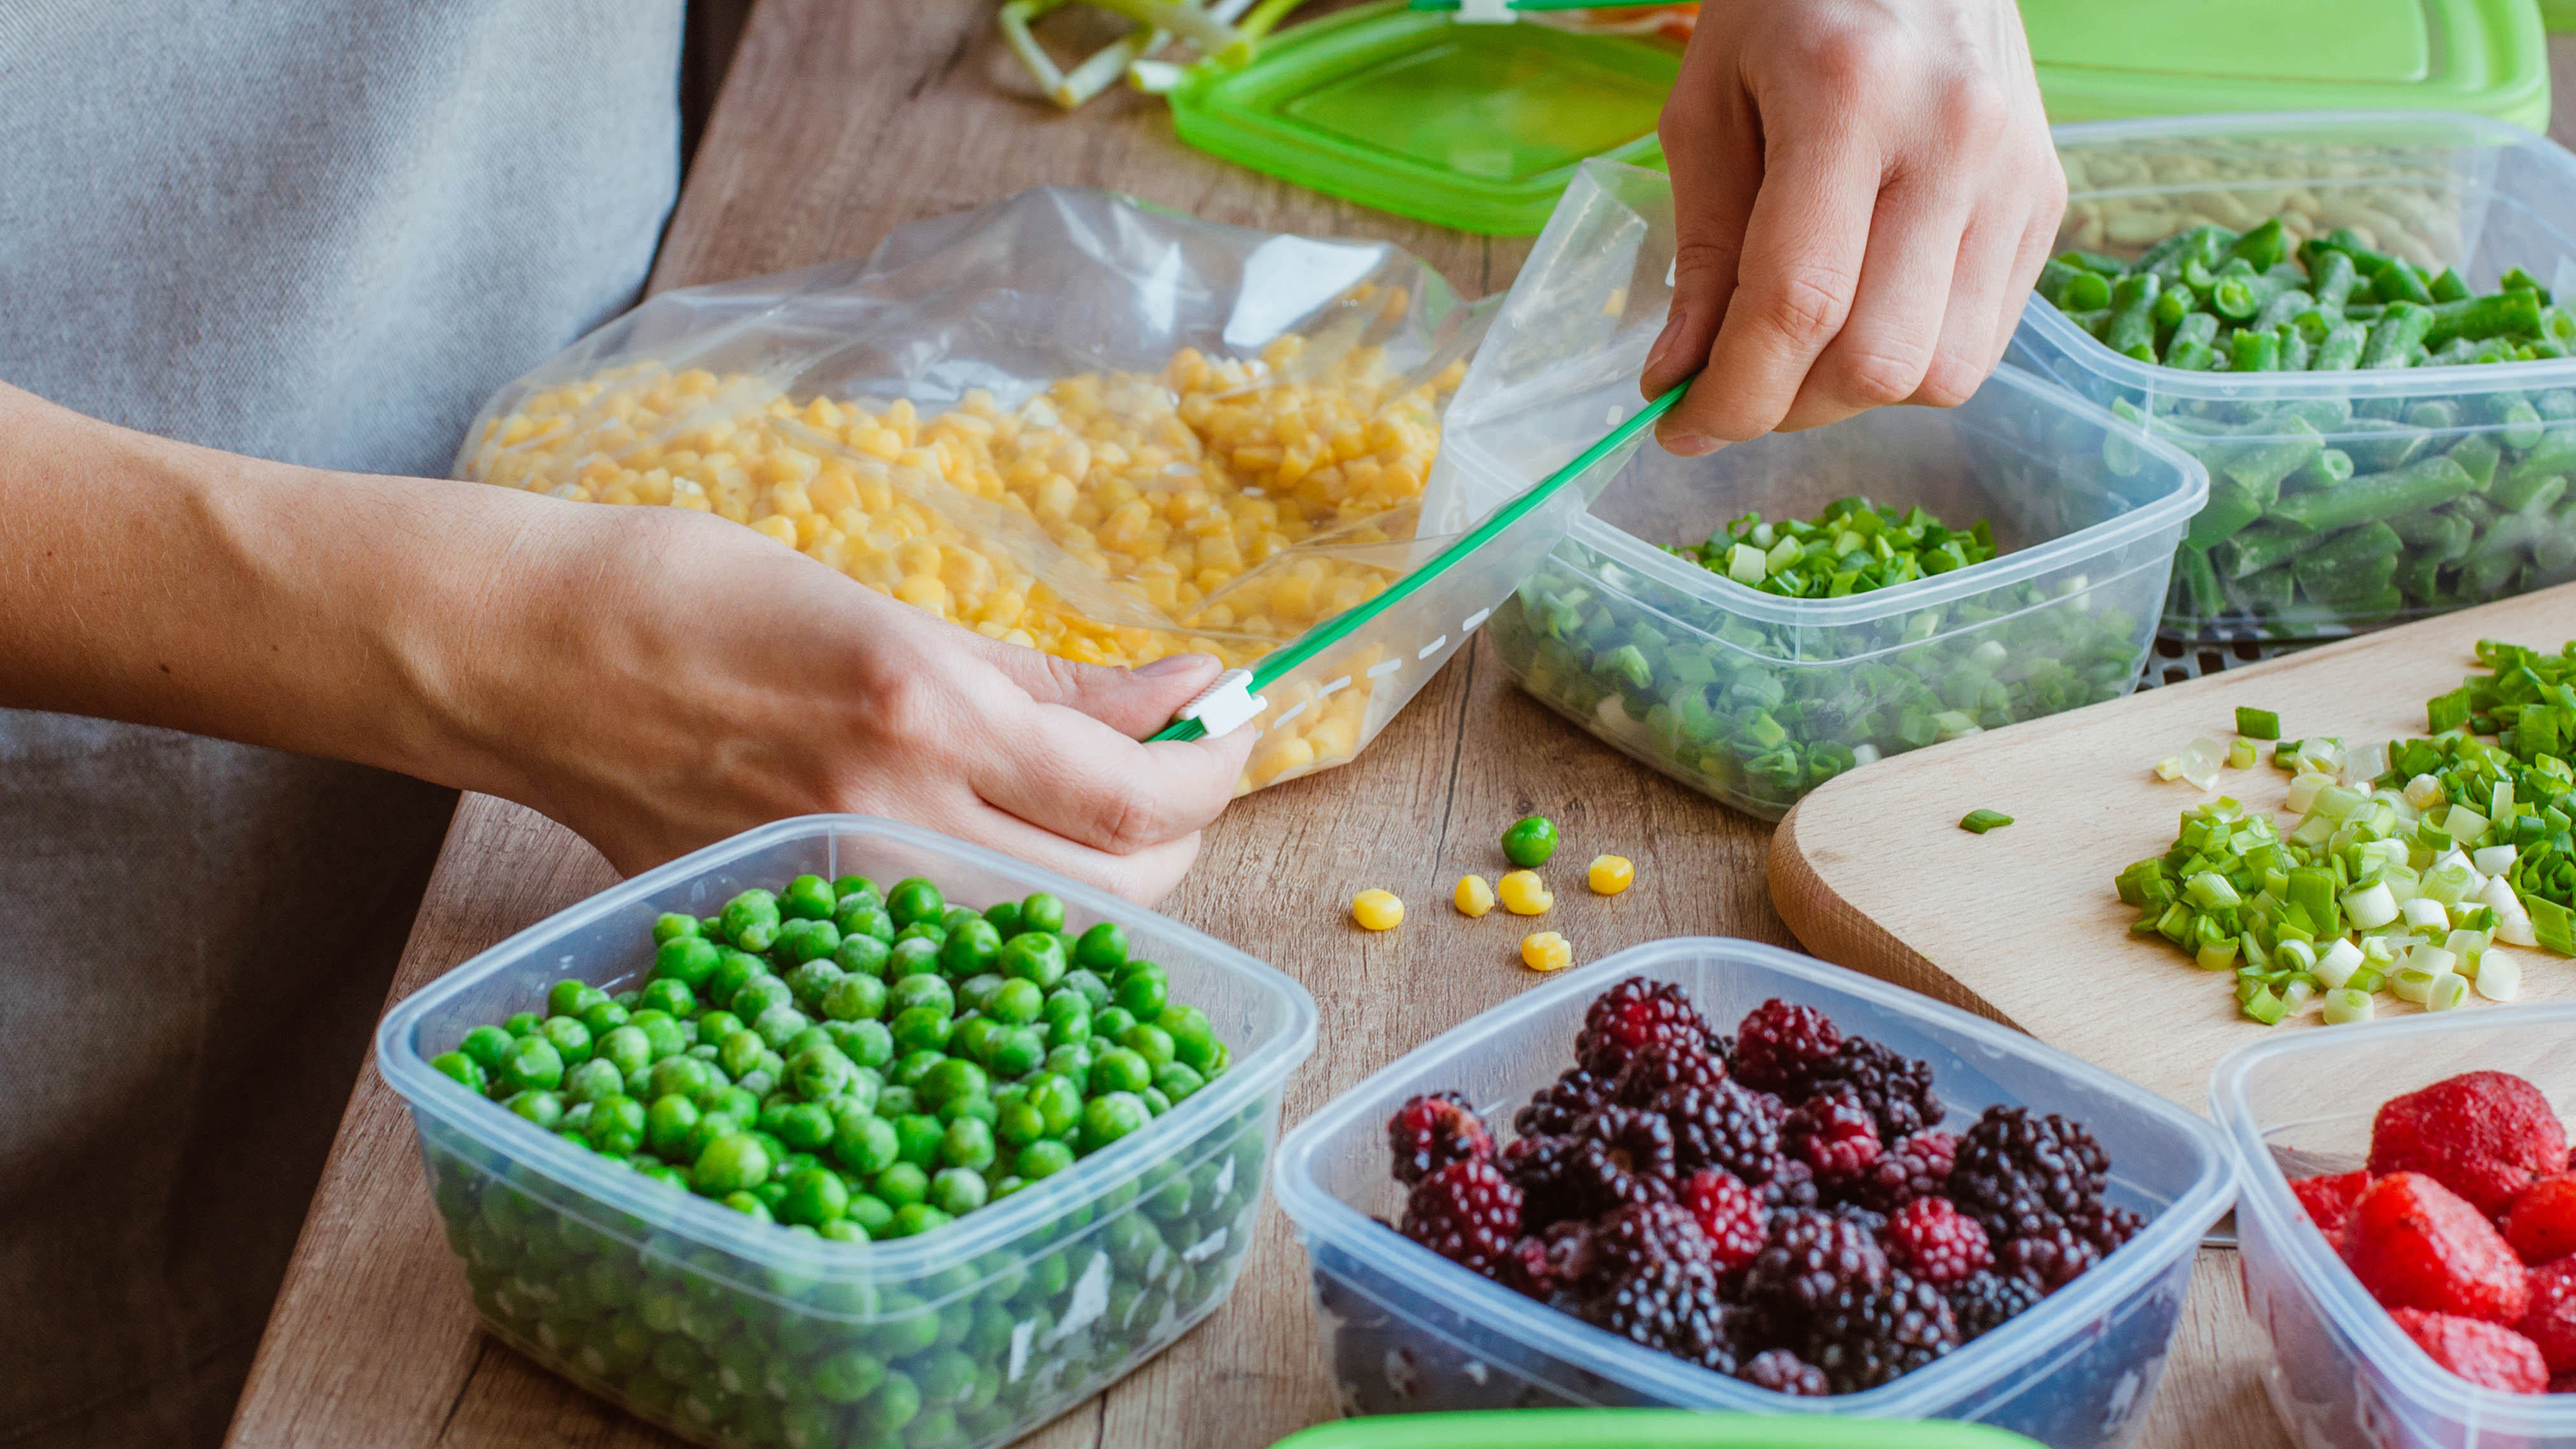 Sealing foods in plastic bags